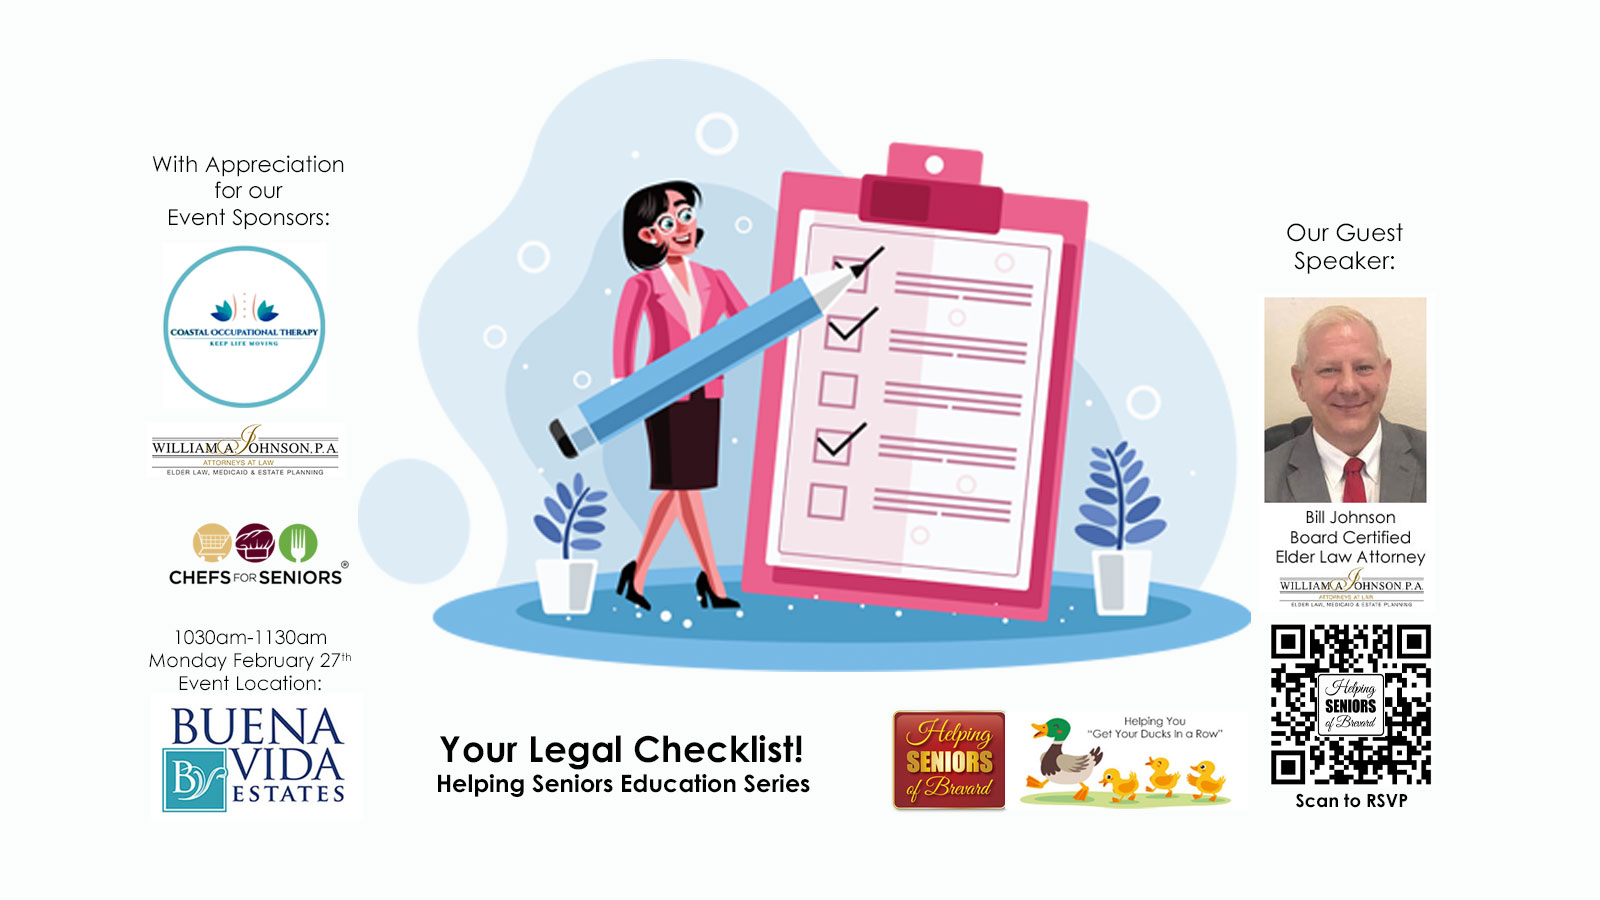 Your Legal Checklist